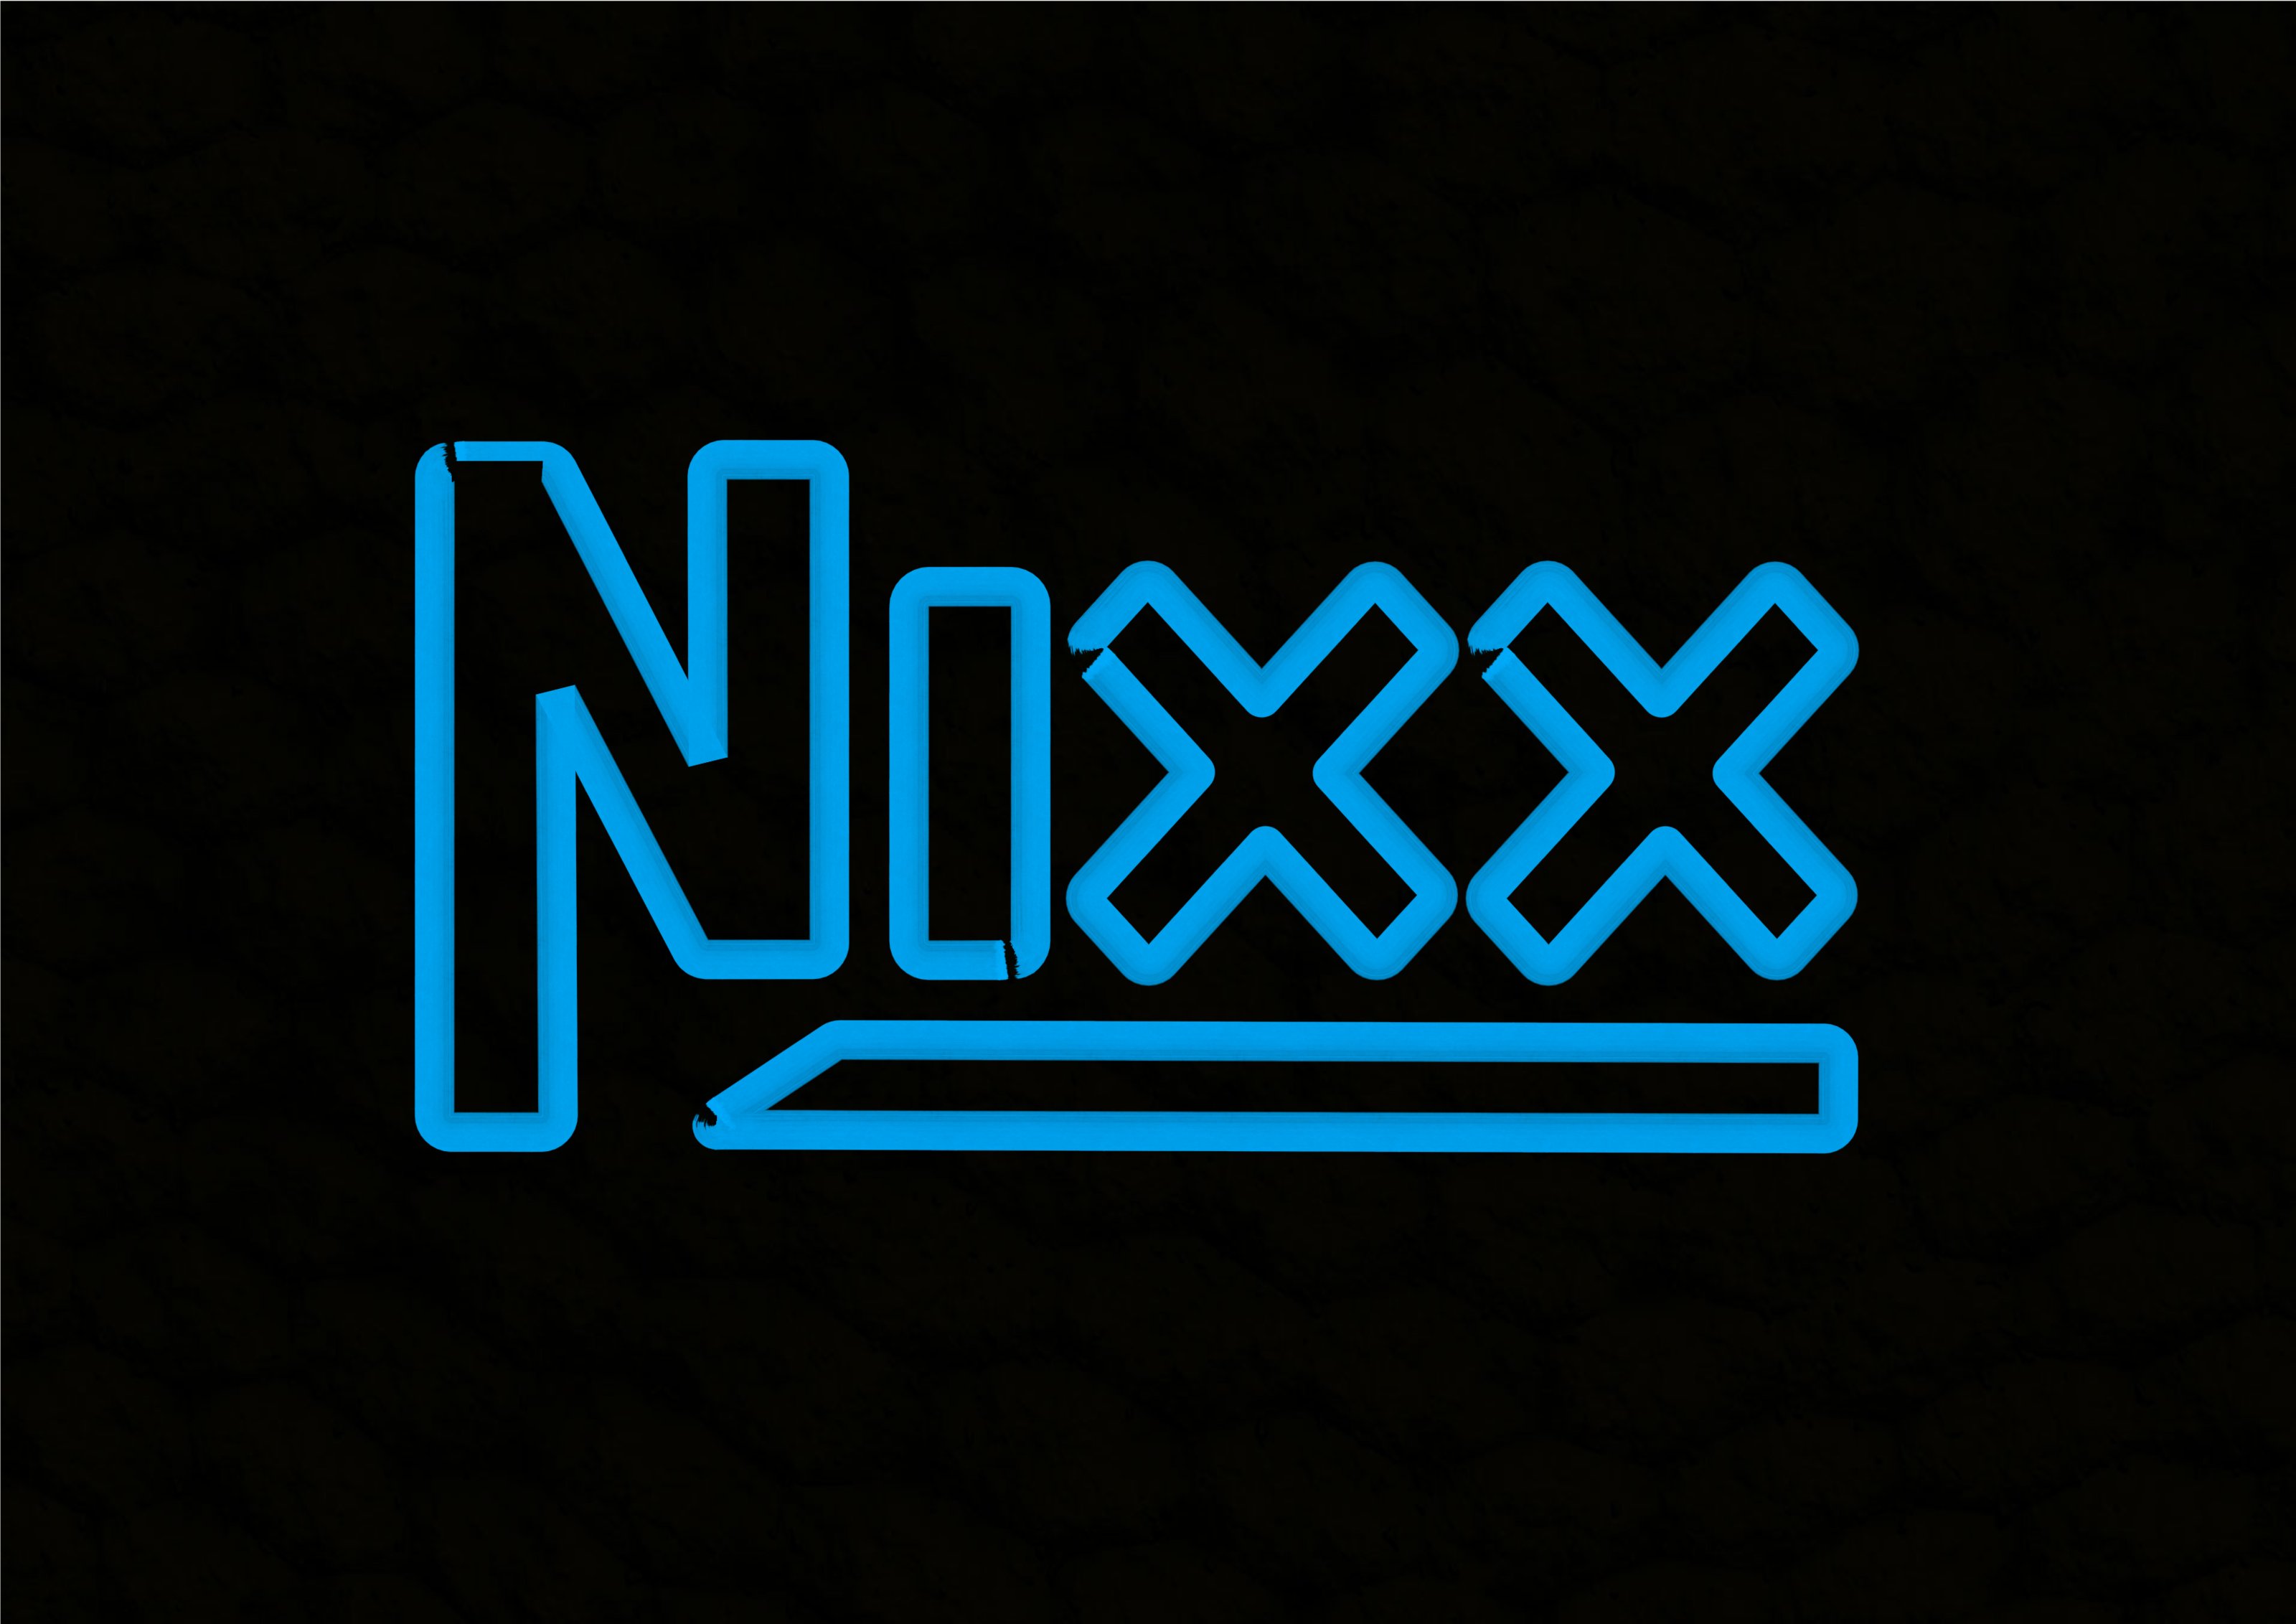 Nixx Reverbnation 